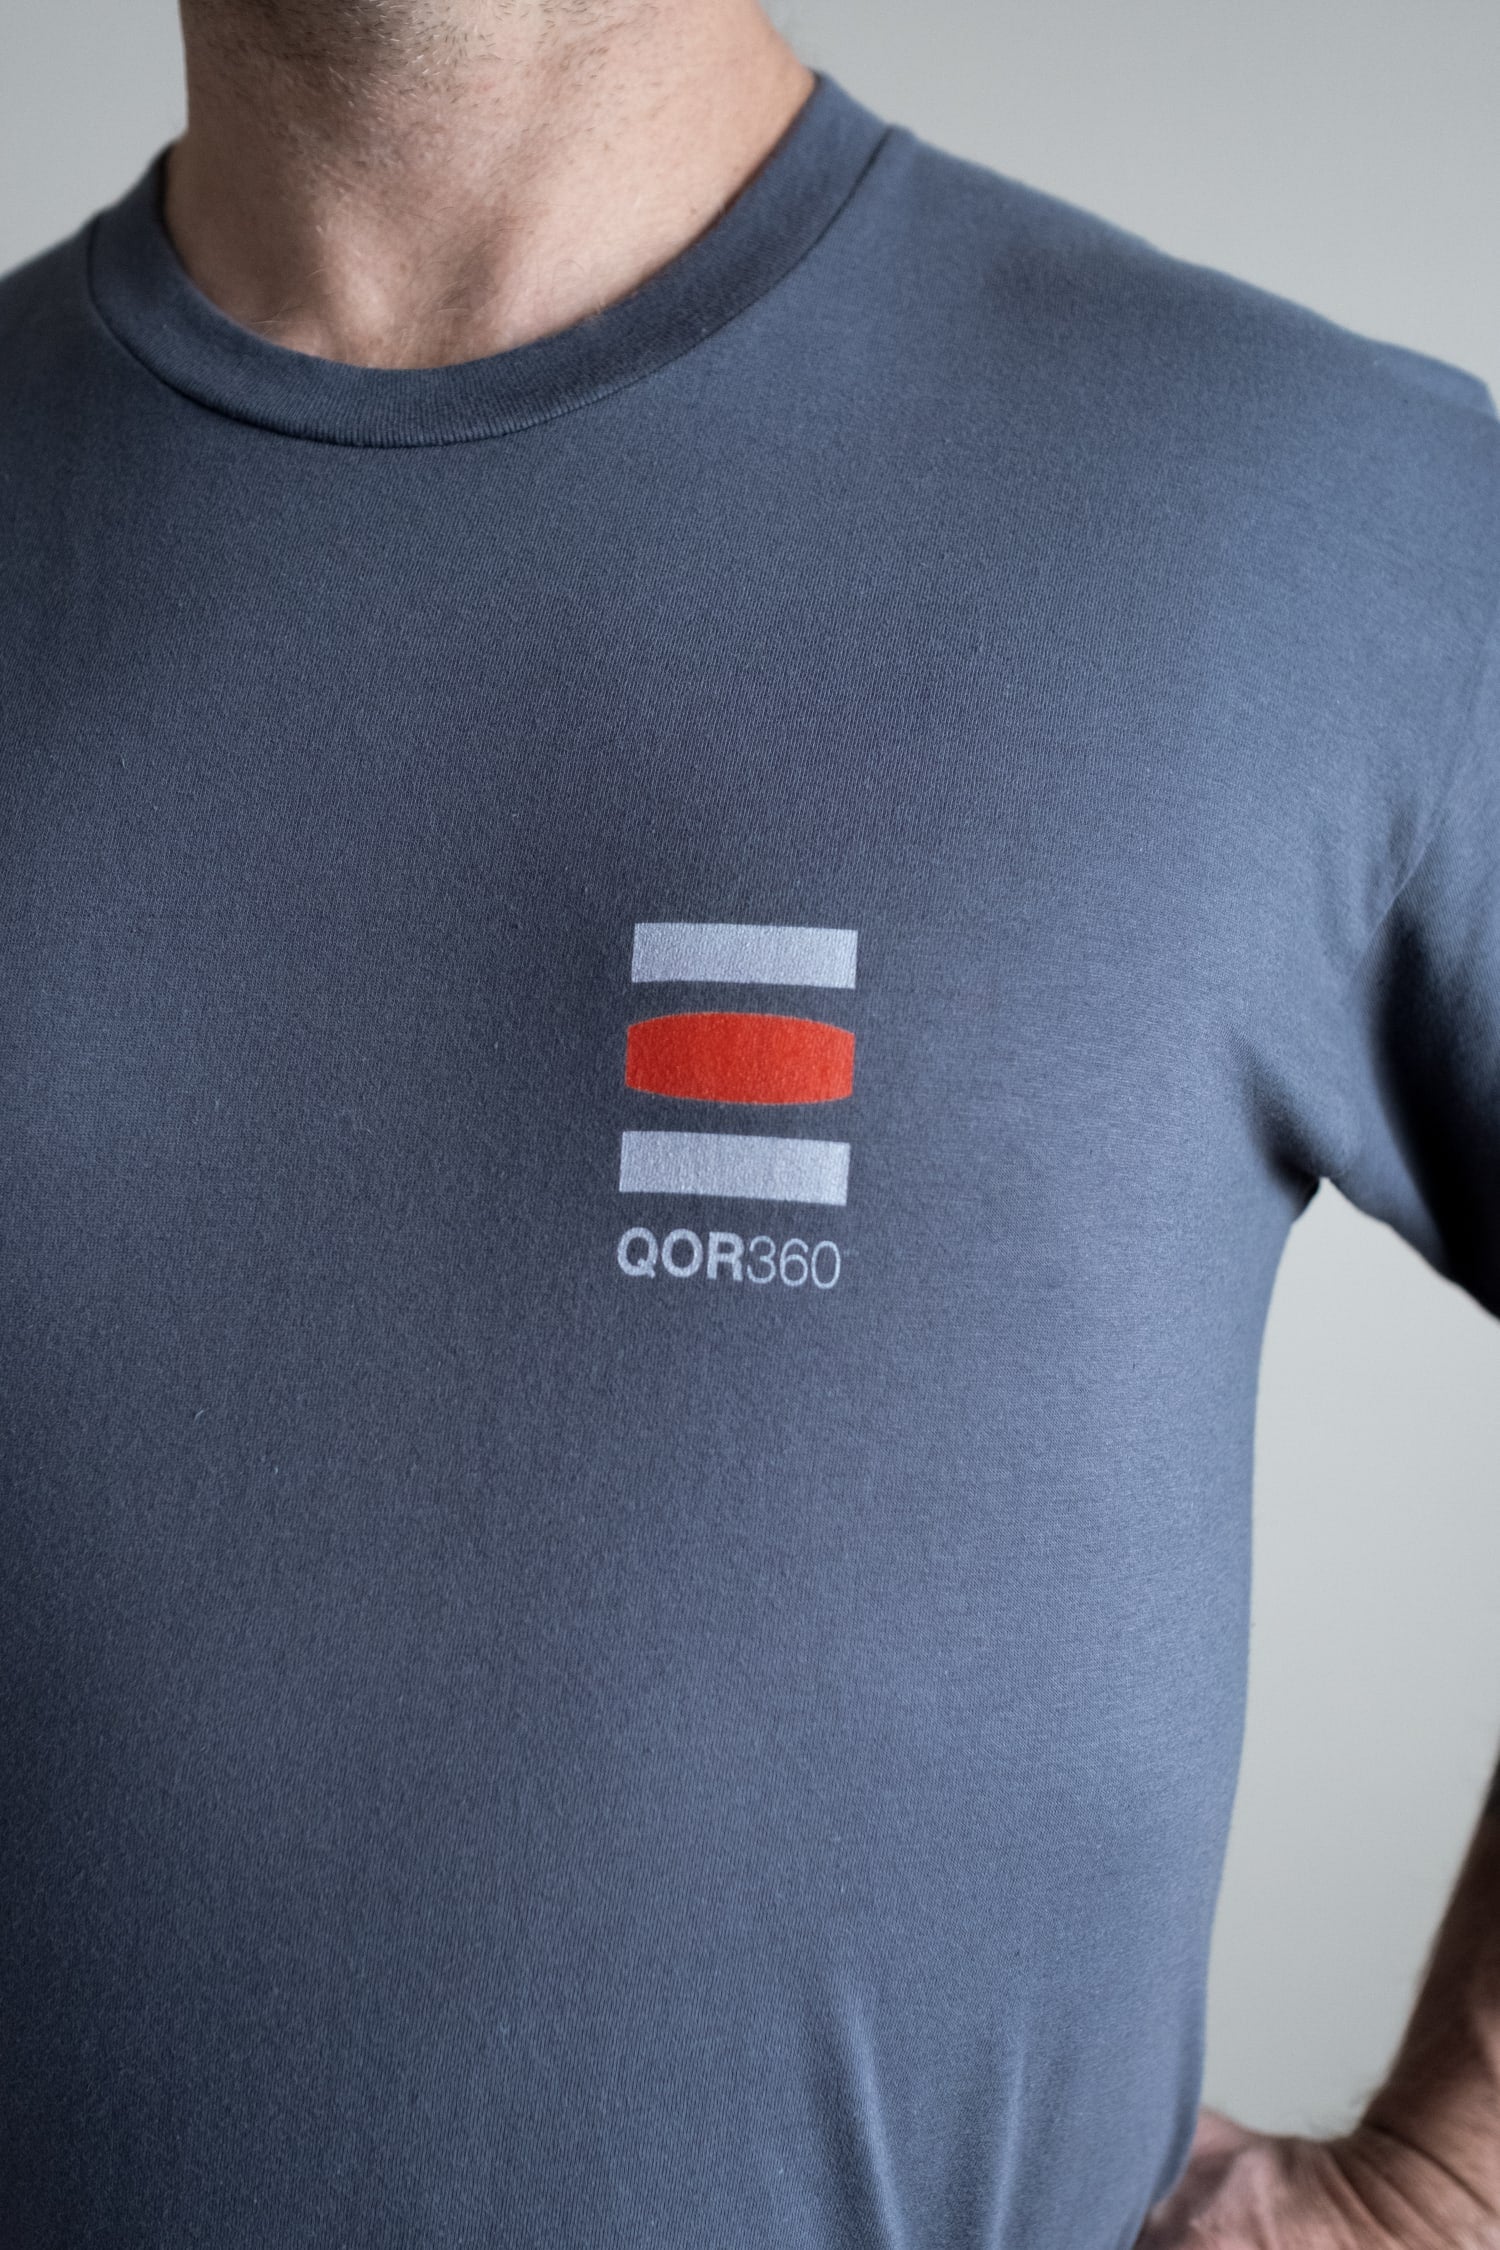 man wearing "give a sit" t-shirt qor360 logo